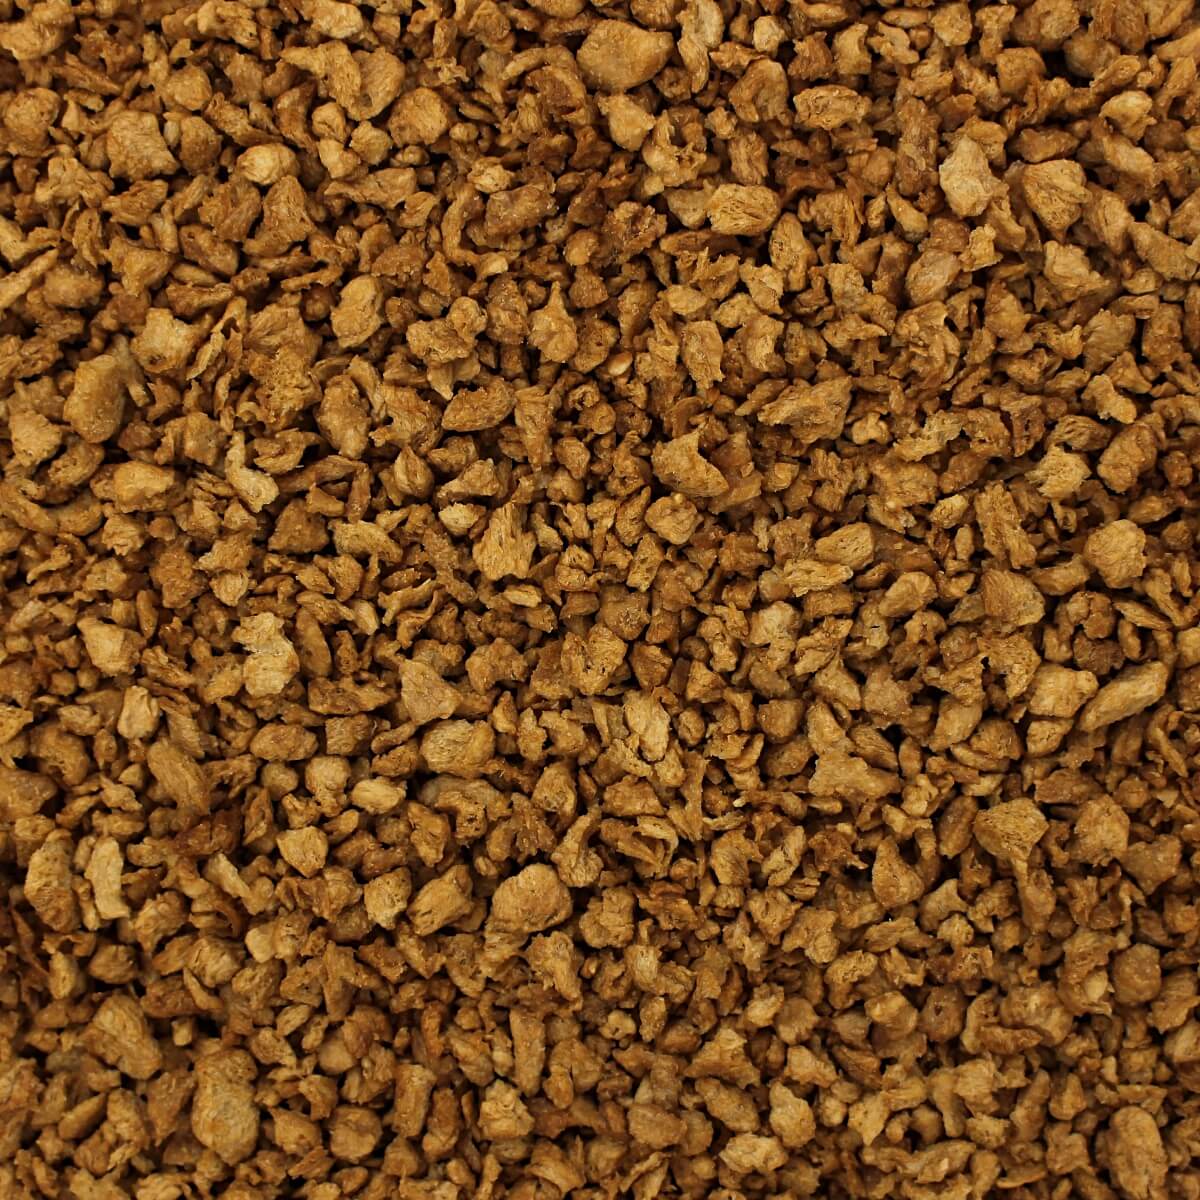 A brown granola close up image.